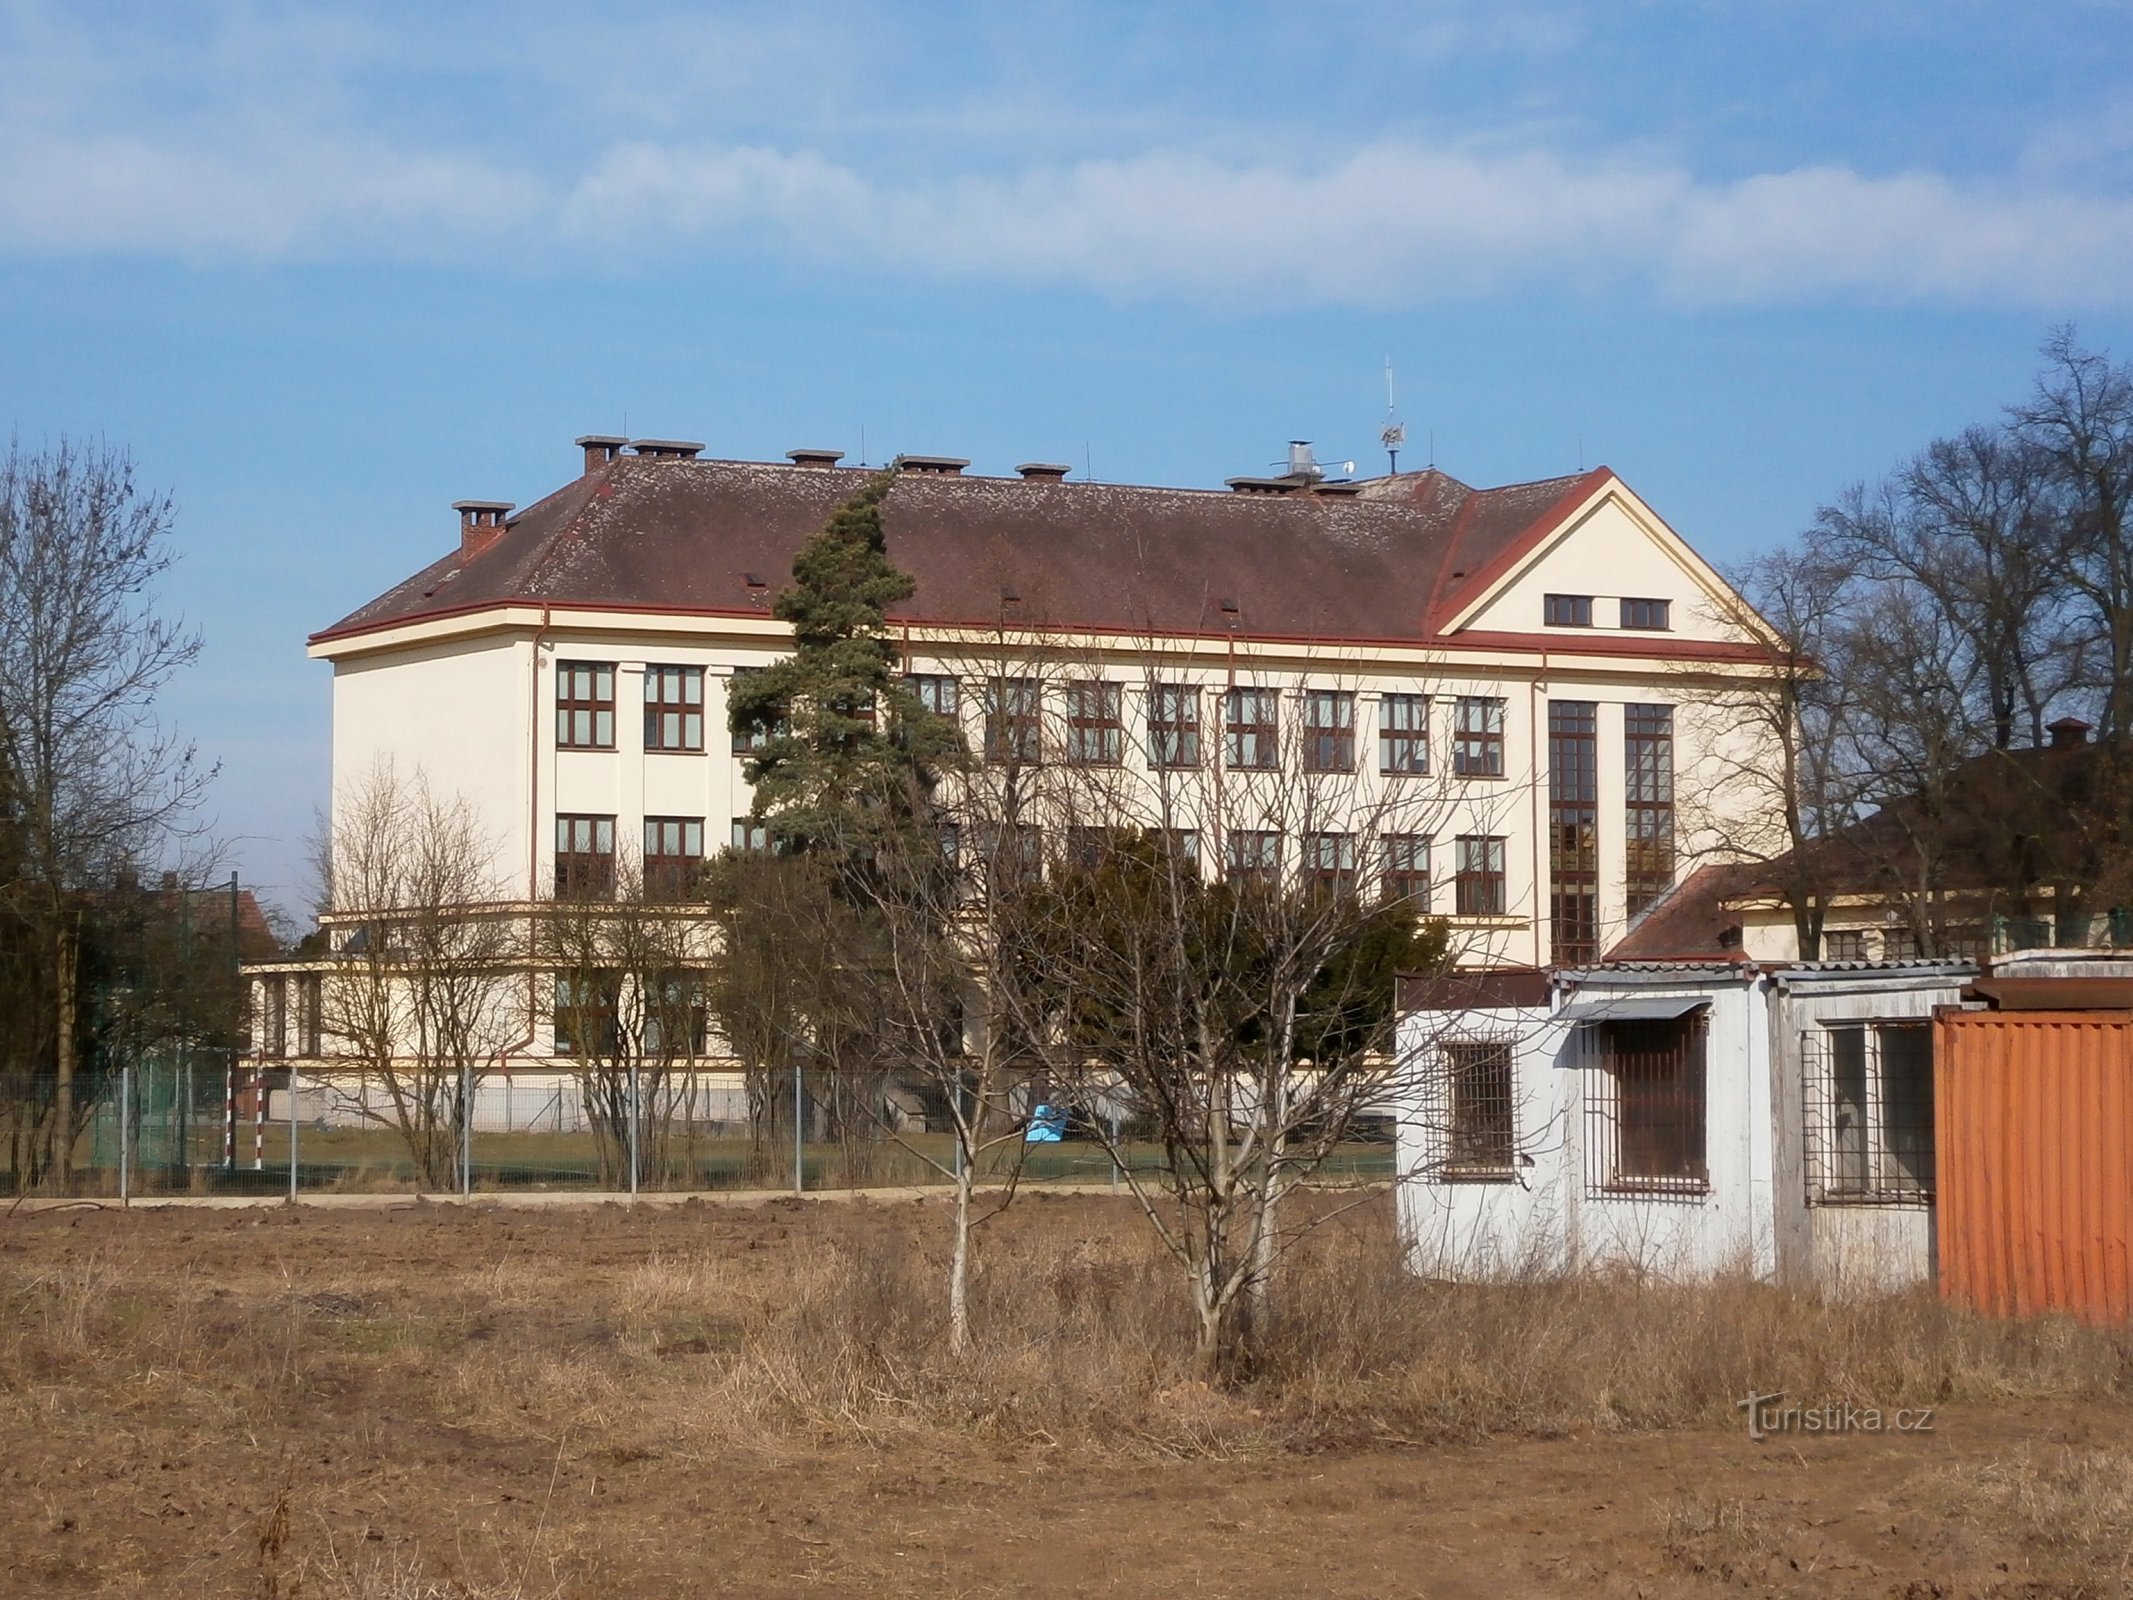 Masaryk Primary School i Plotiště nad Labem (Hradec Králové, 9.3.2015/XNUMX/XNUMX)